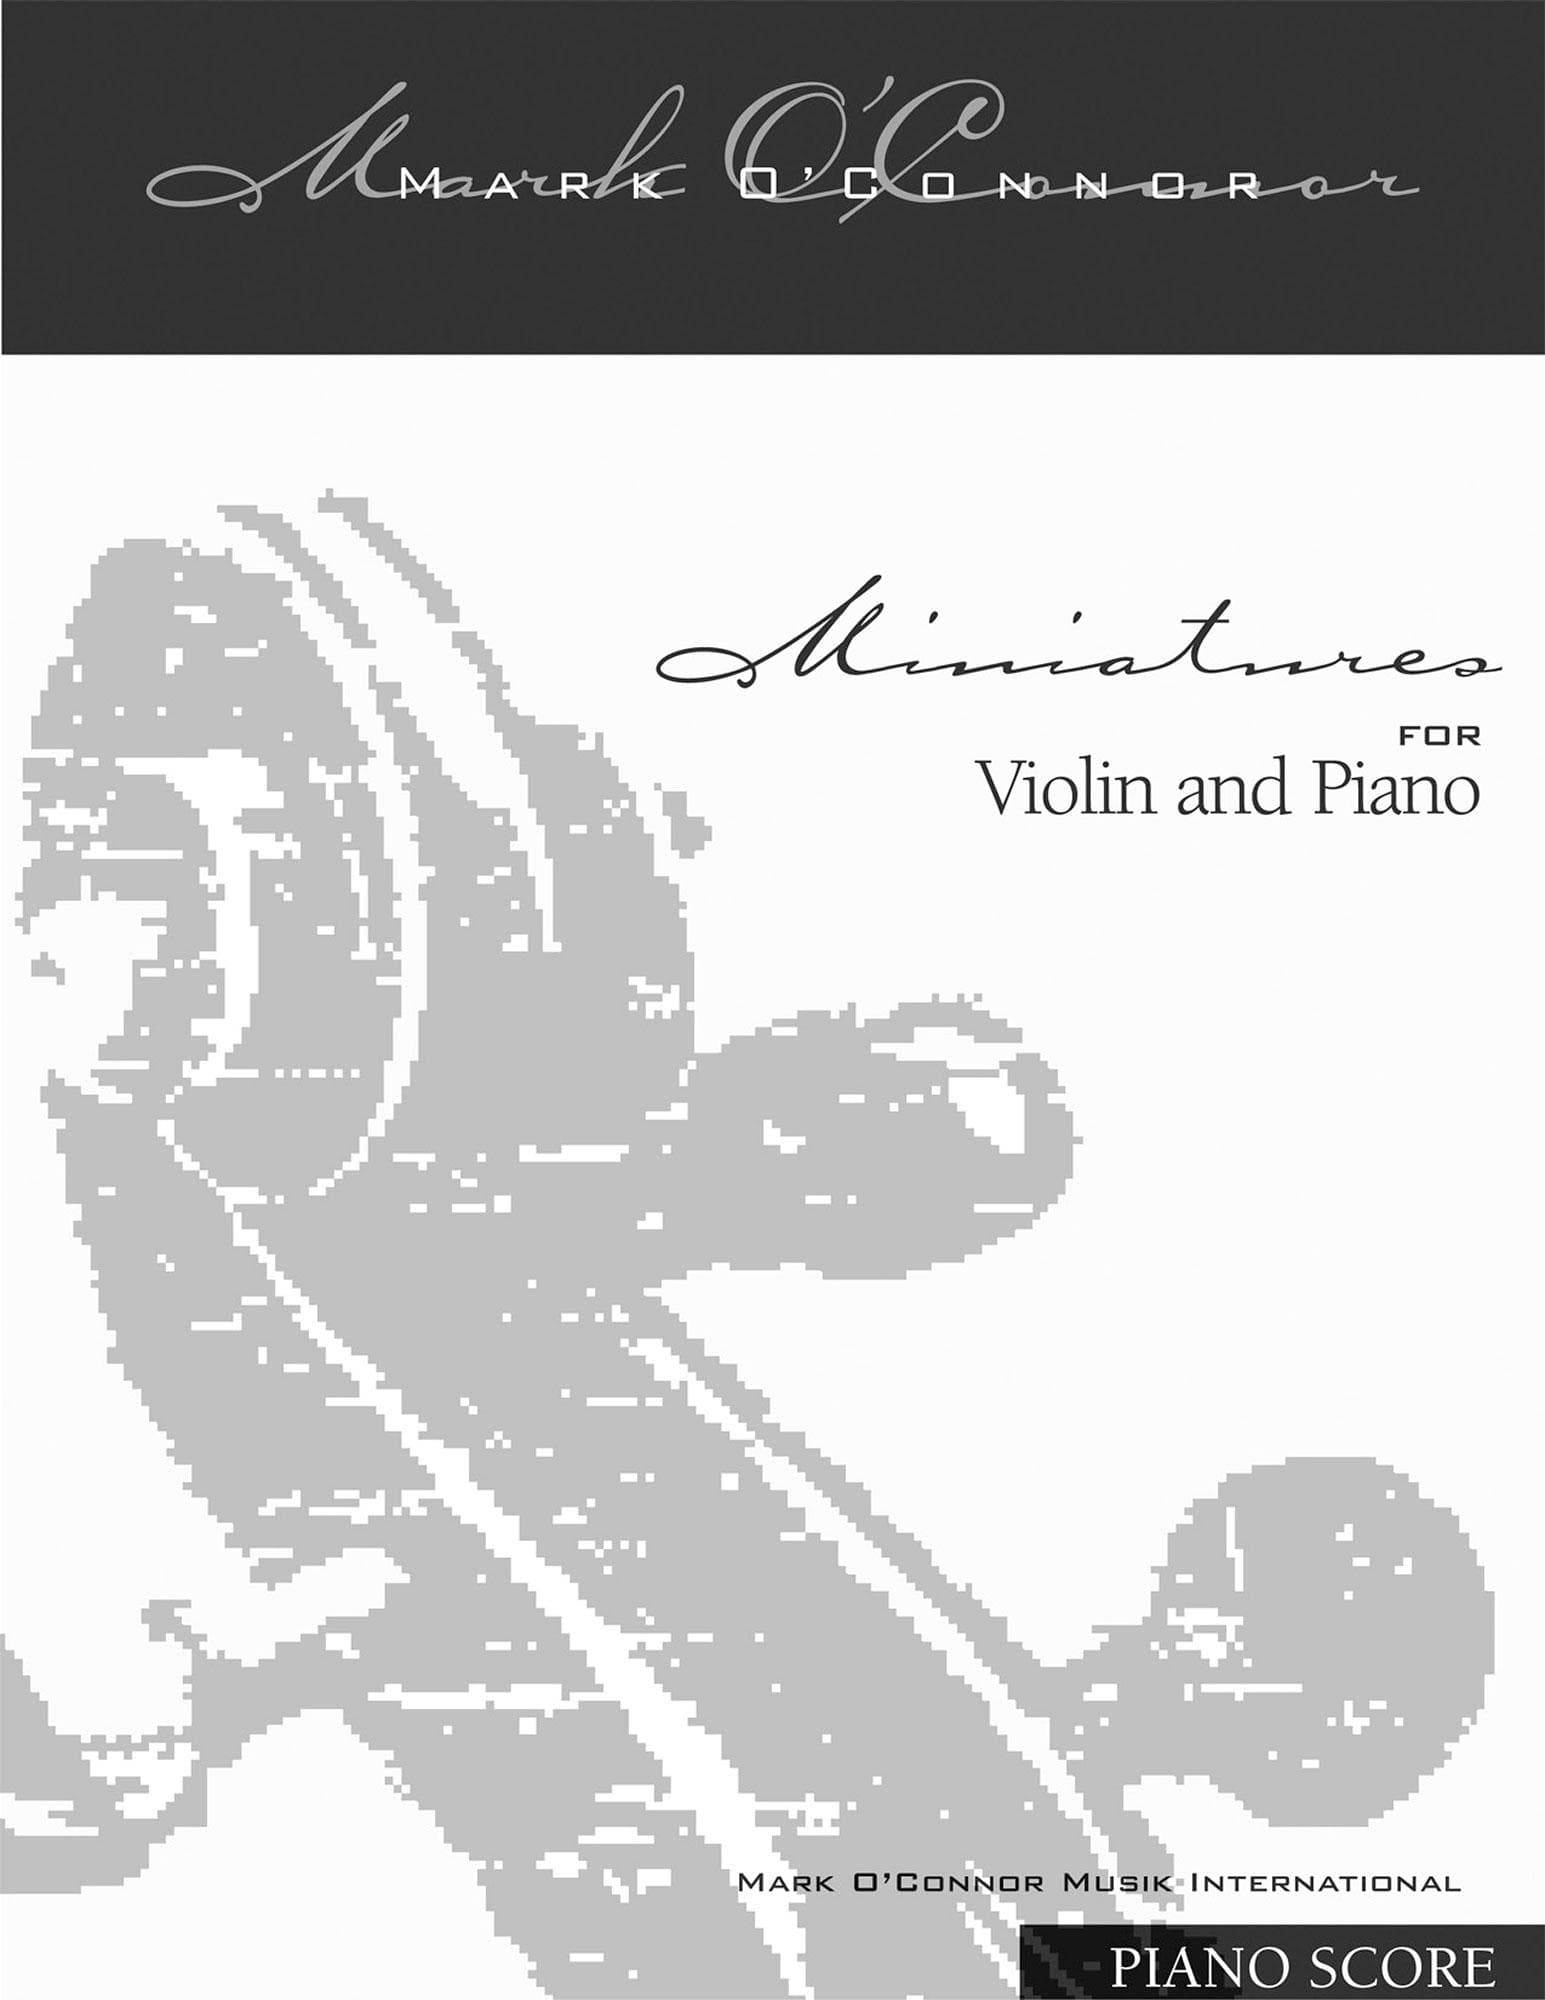 O'Connor, Mark - Miniatures for Violin and Piano - Piano Score - Digital Download